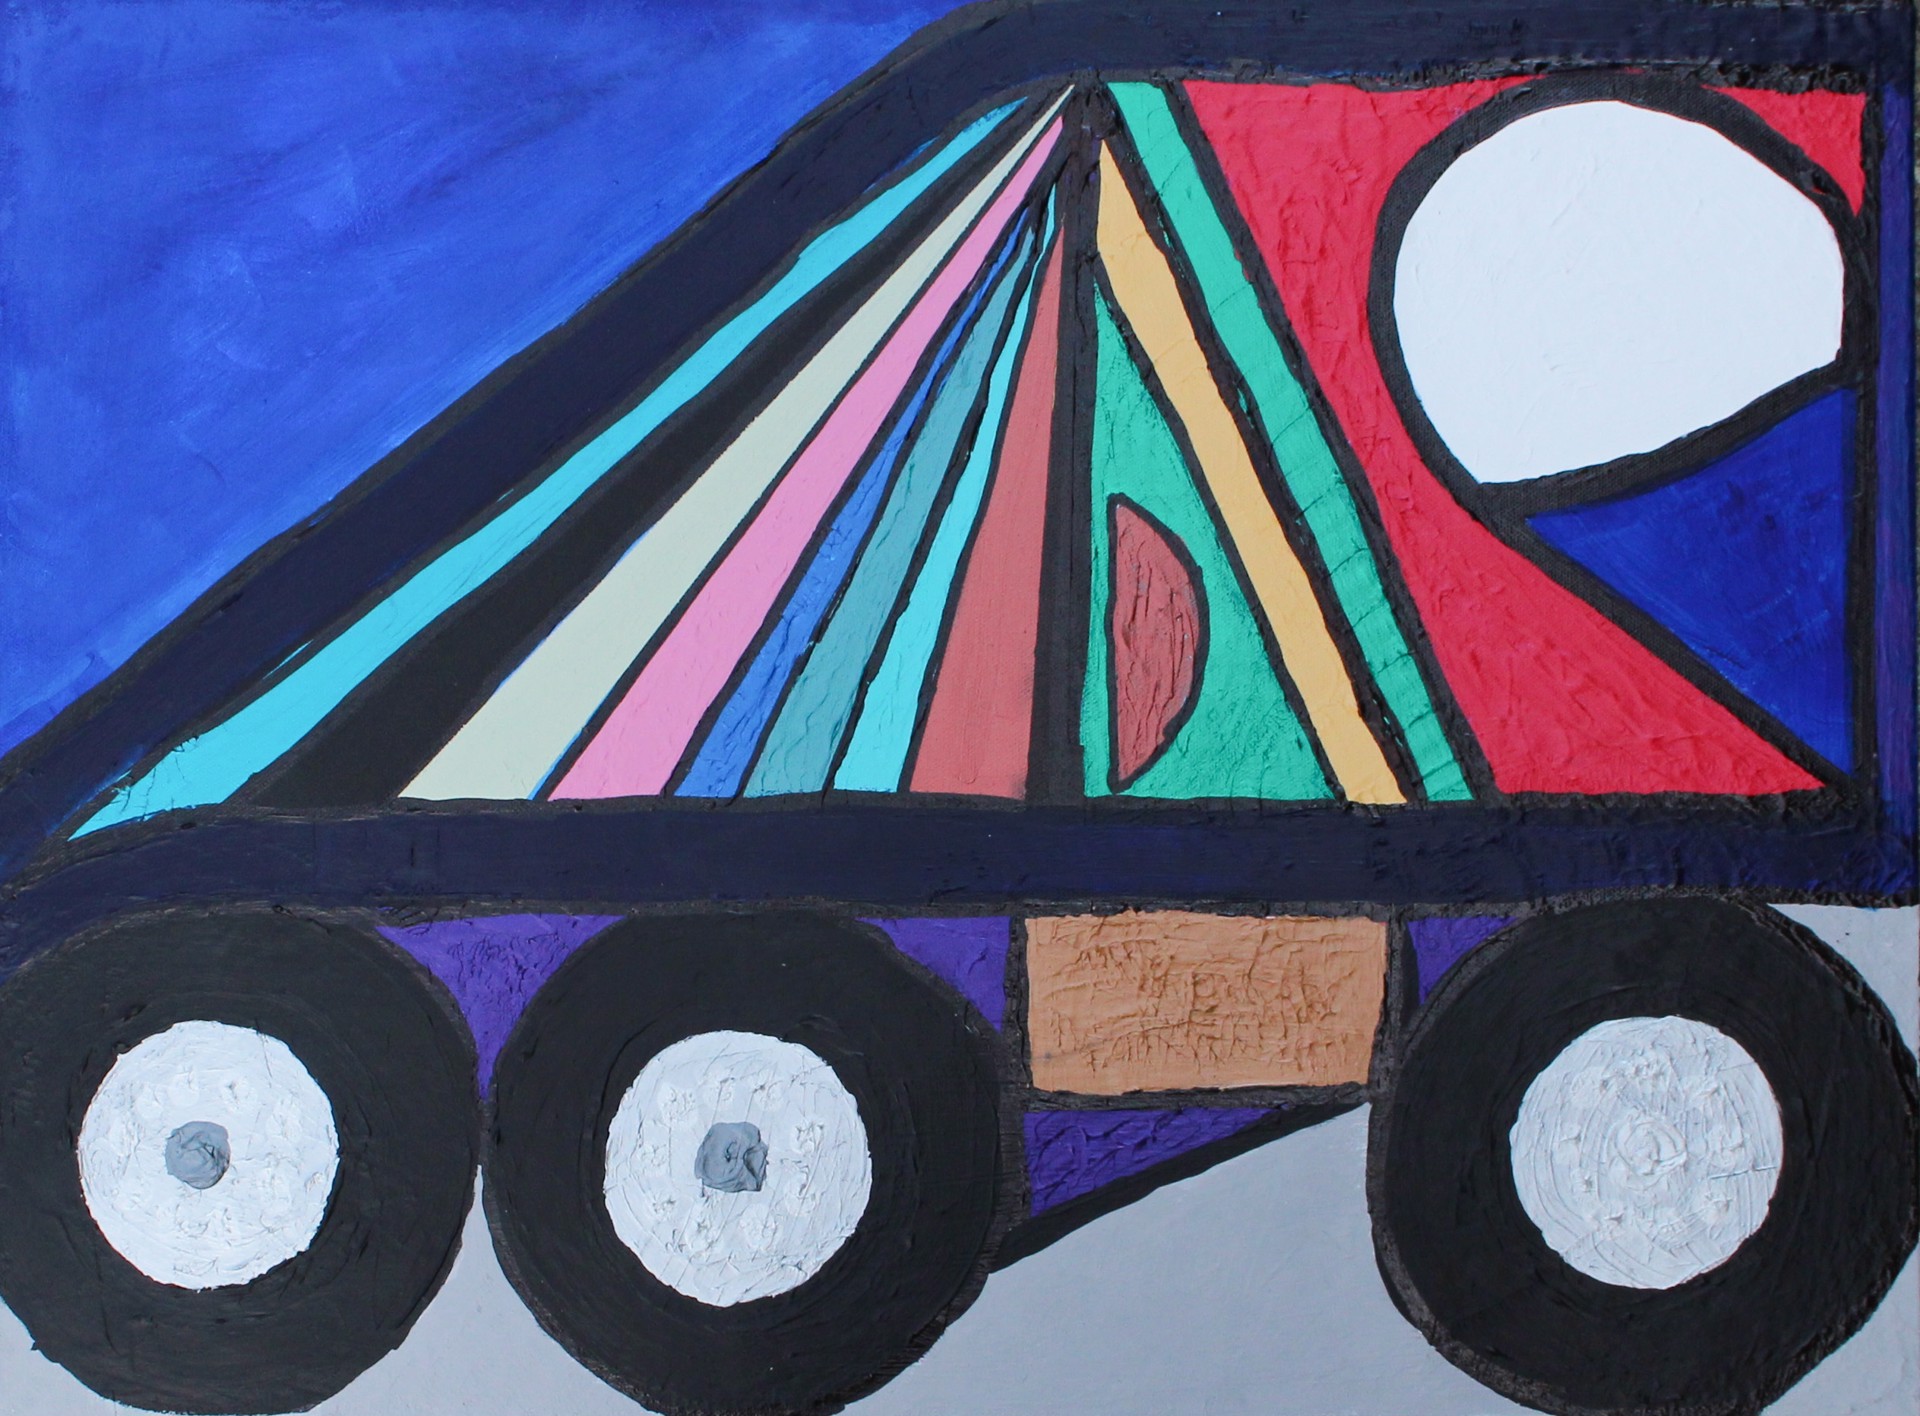 Show Truck (Triptych) by Chris Schallhorn